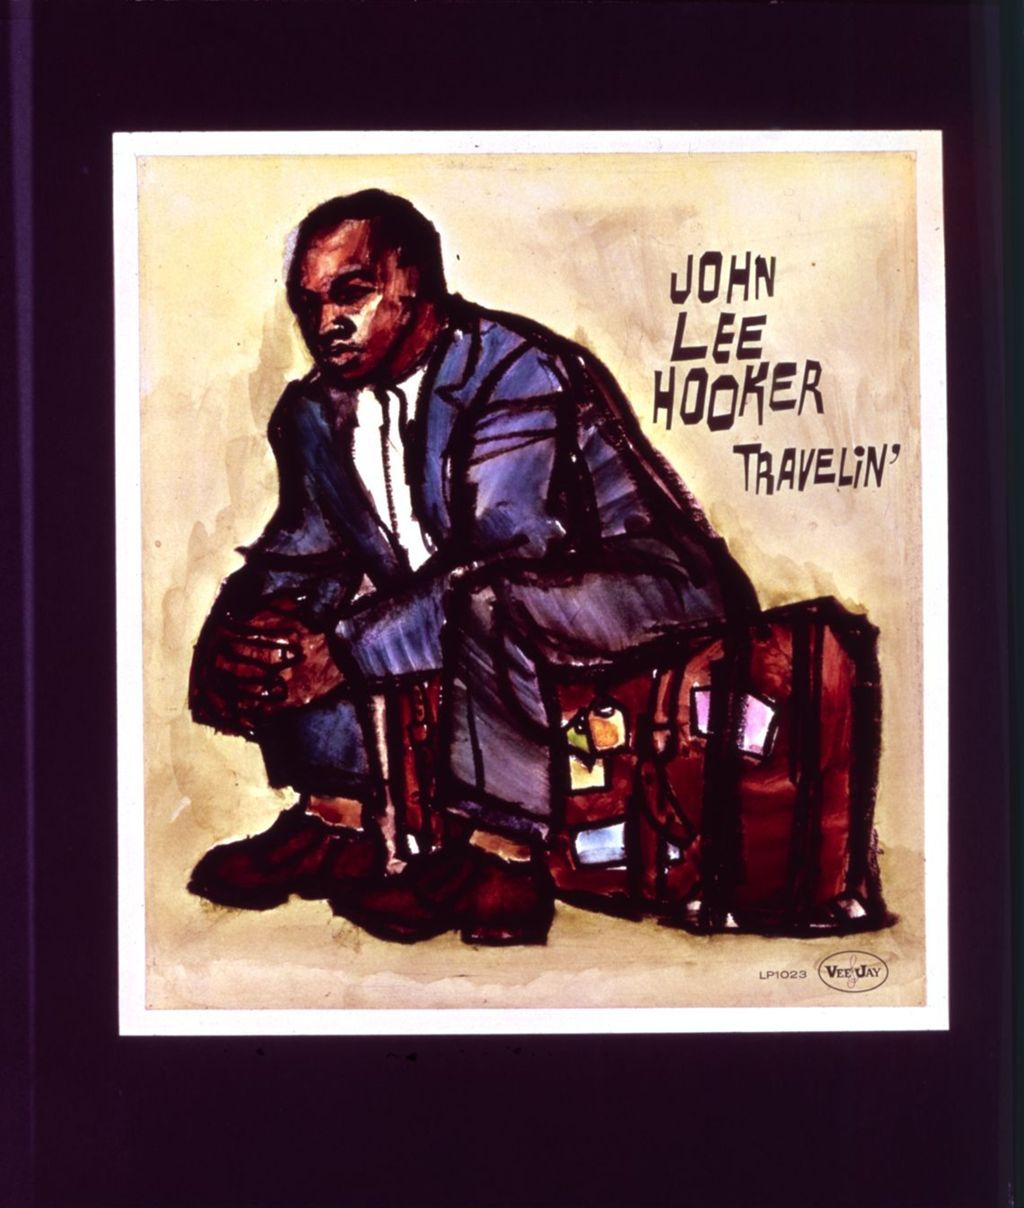 Miniature of Travelin', John Lee Hooker, album cover